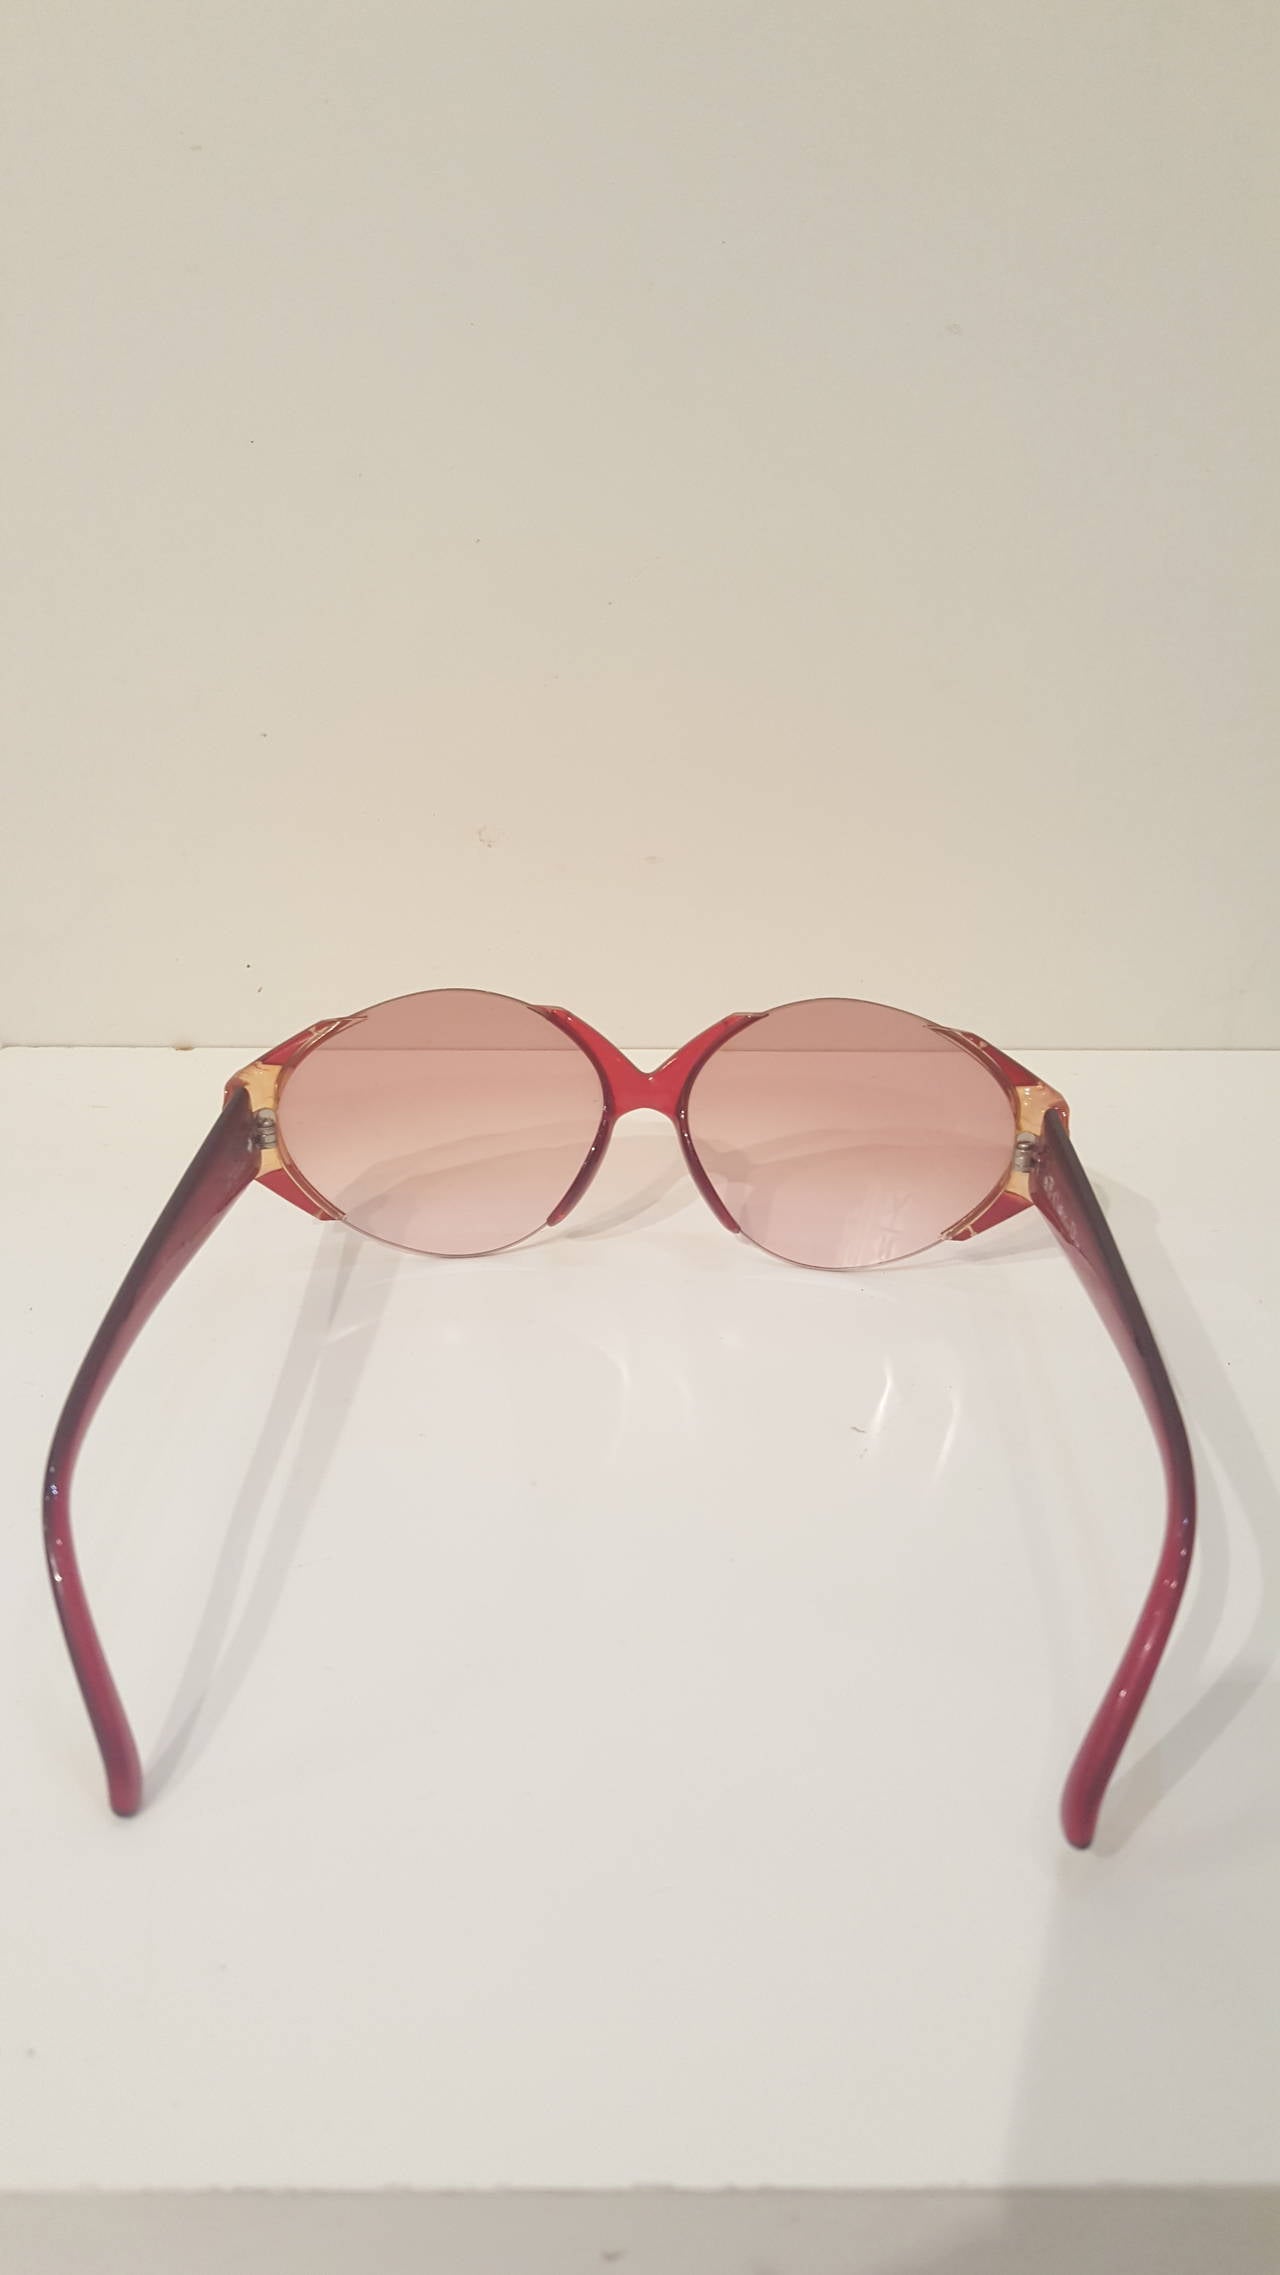 Women's 1980s Christian Dior red sunglasses